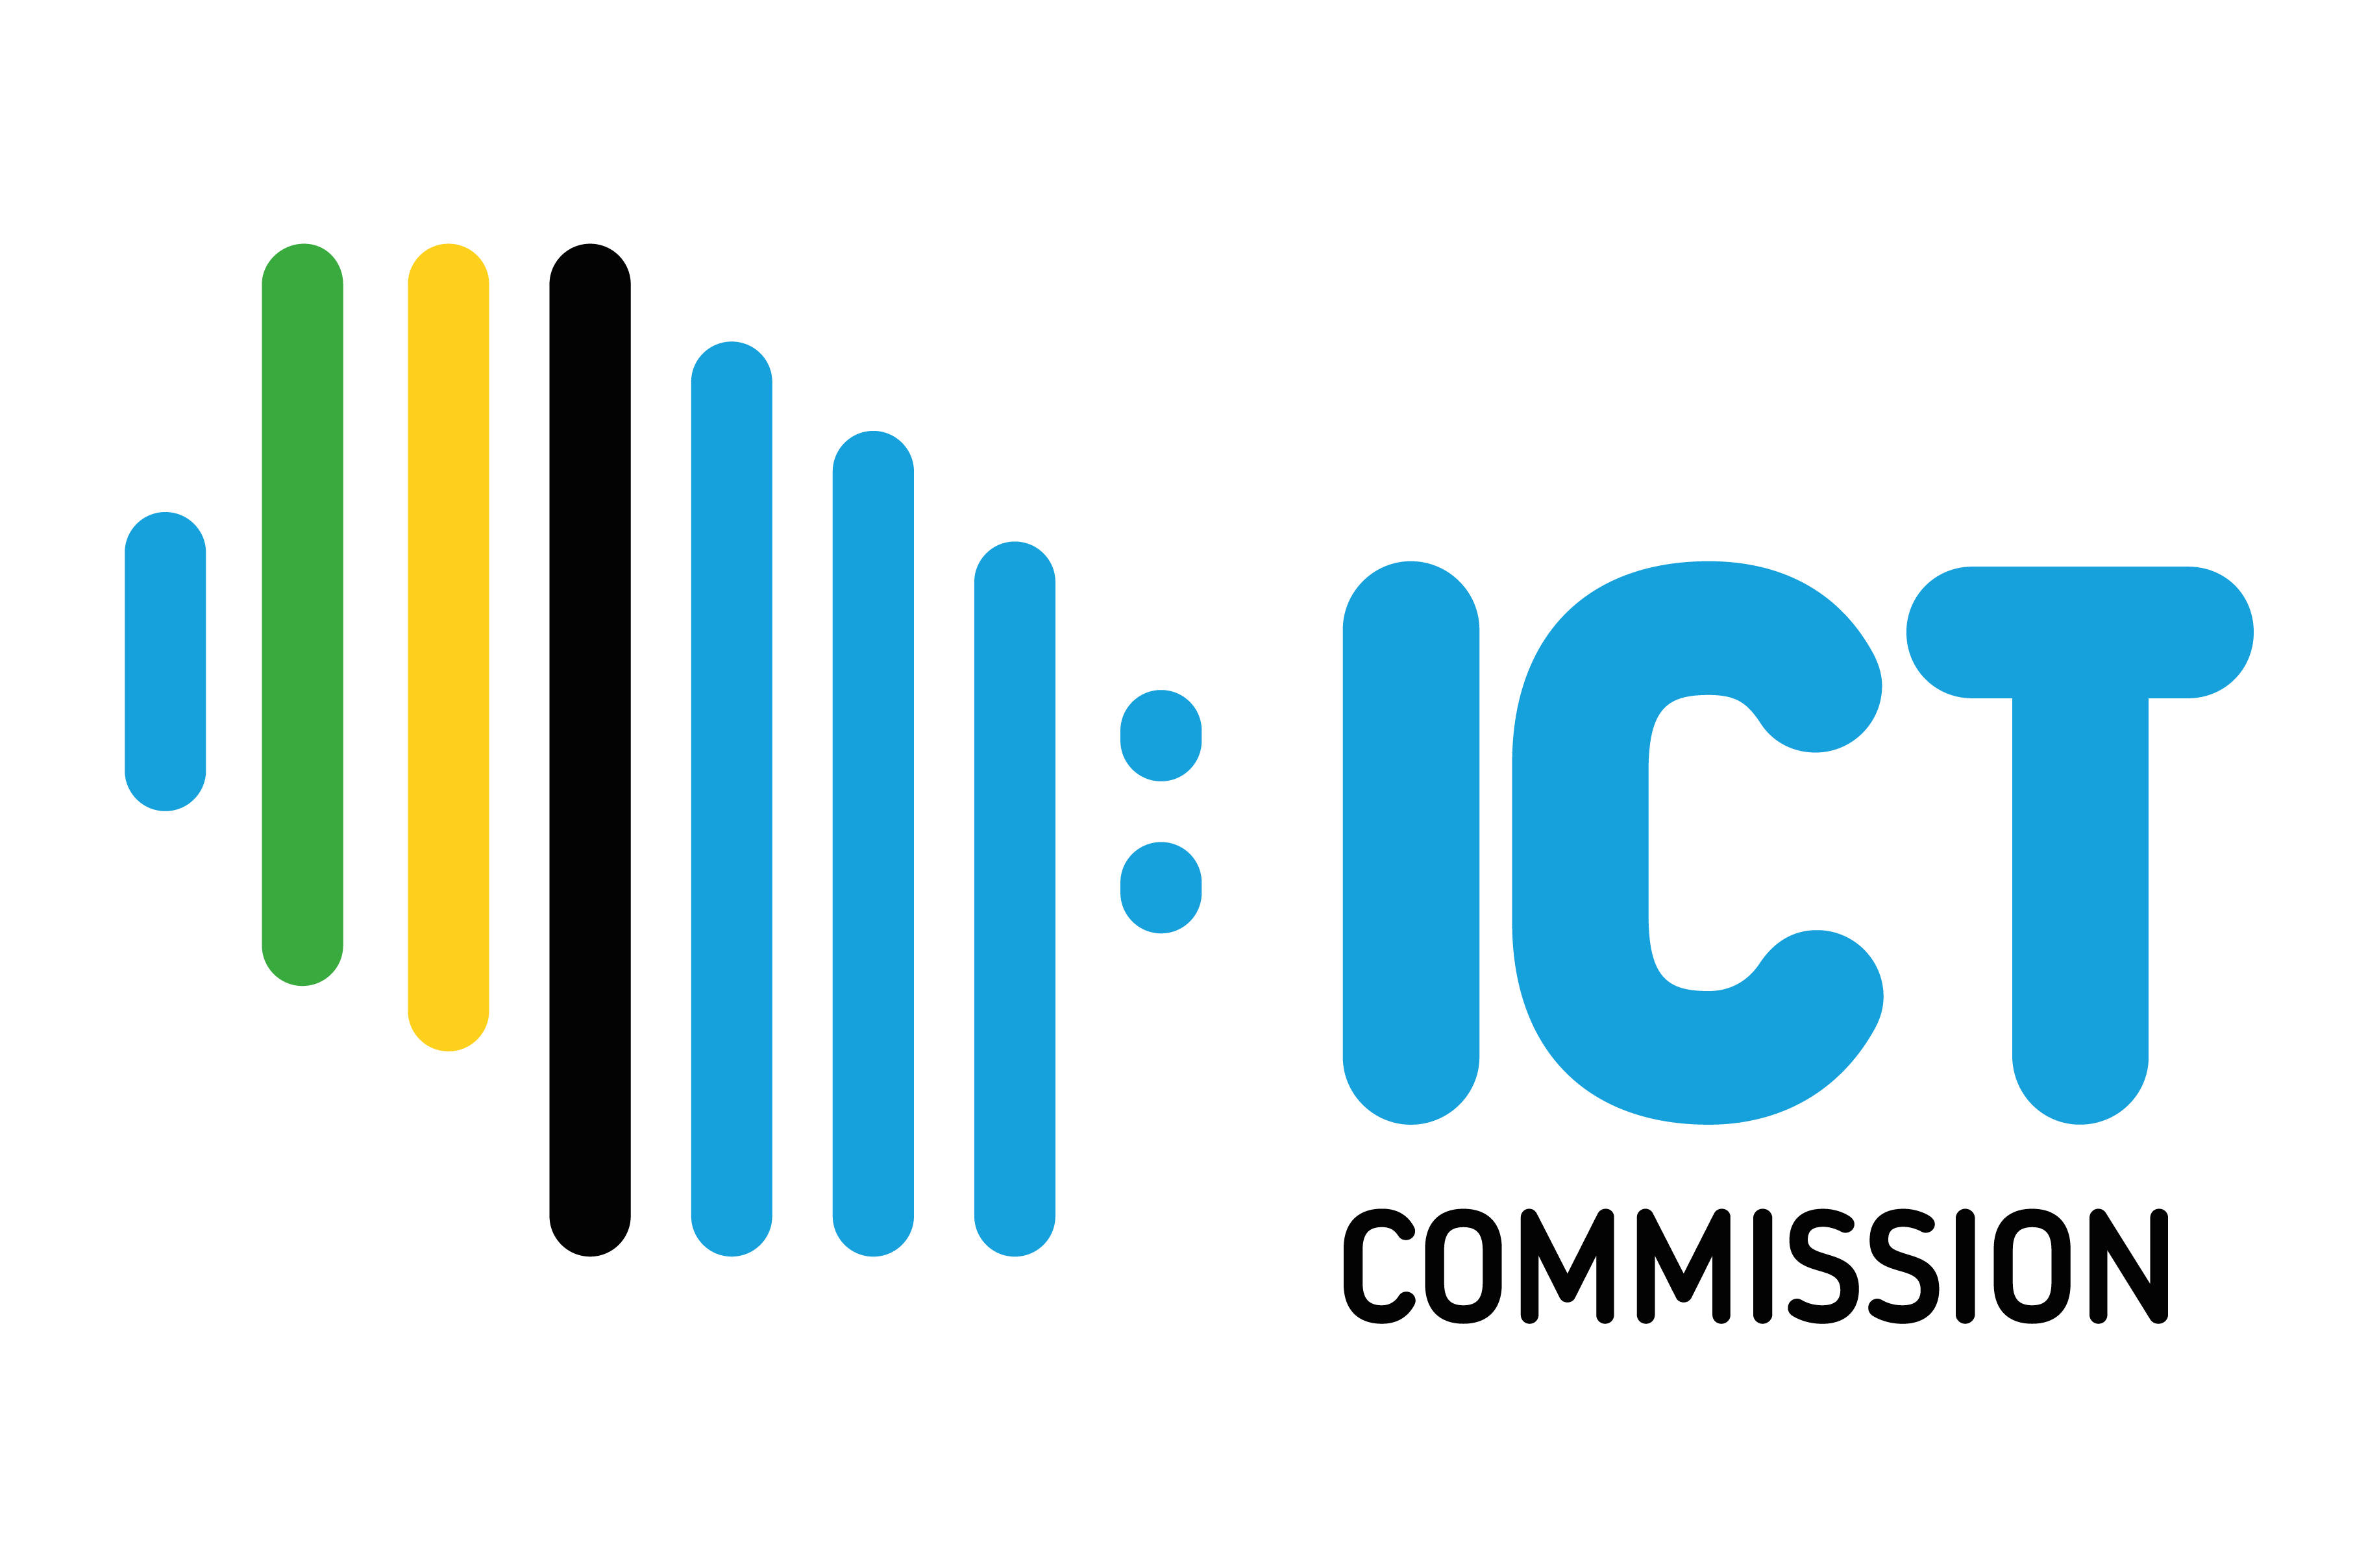 ICTC Logo